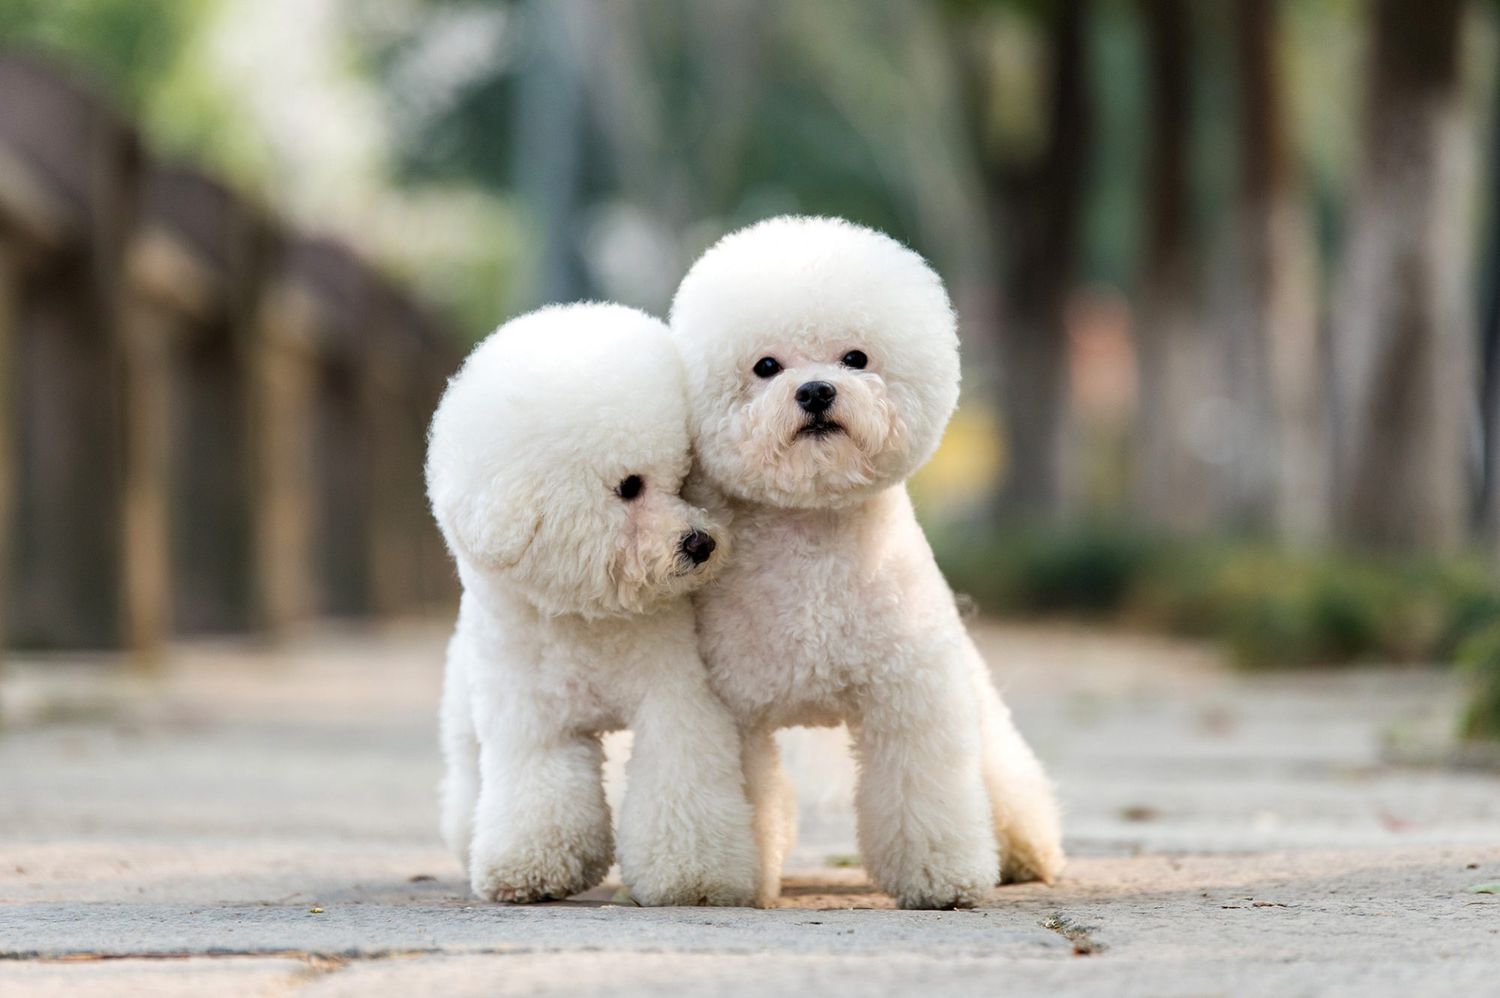 poodles with teddy bear haircut